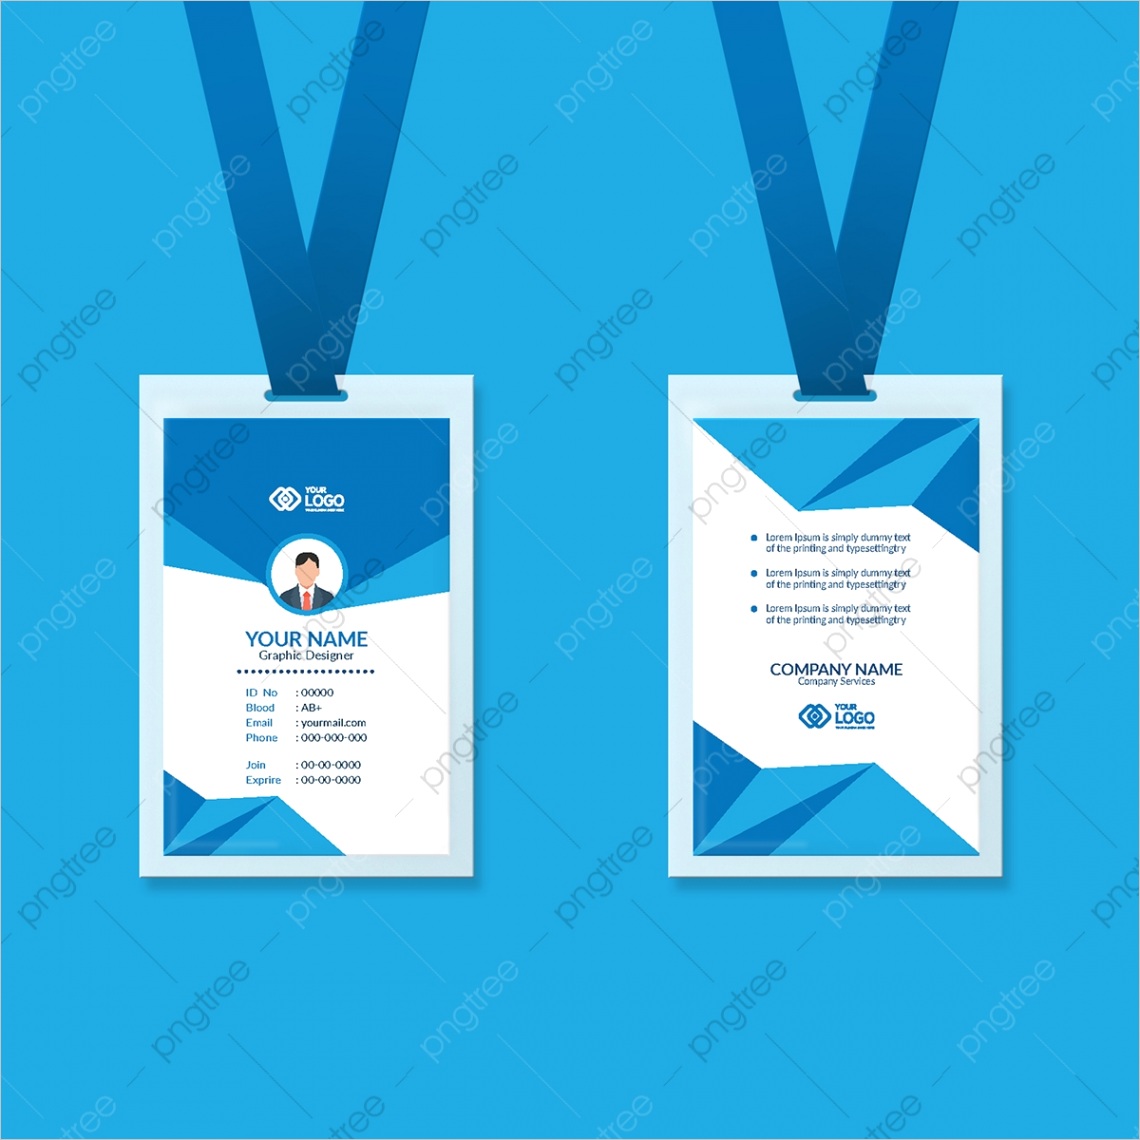 employee id card design template ml